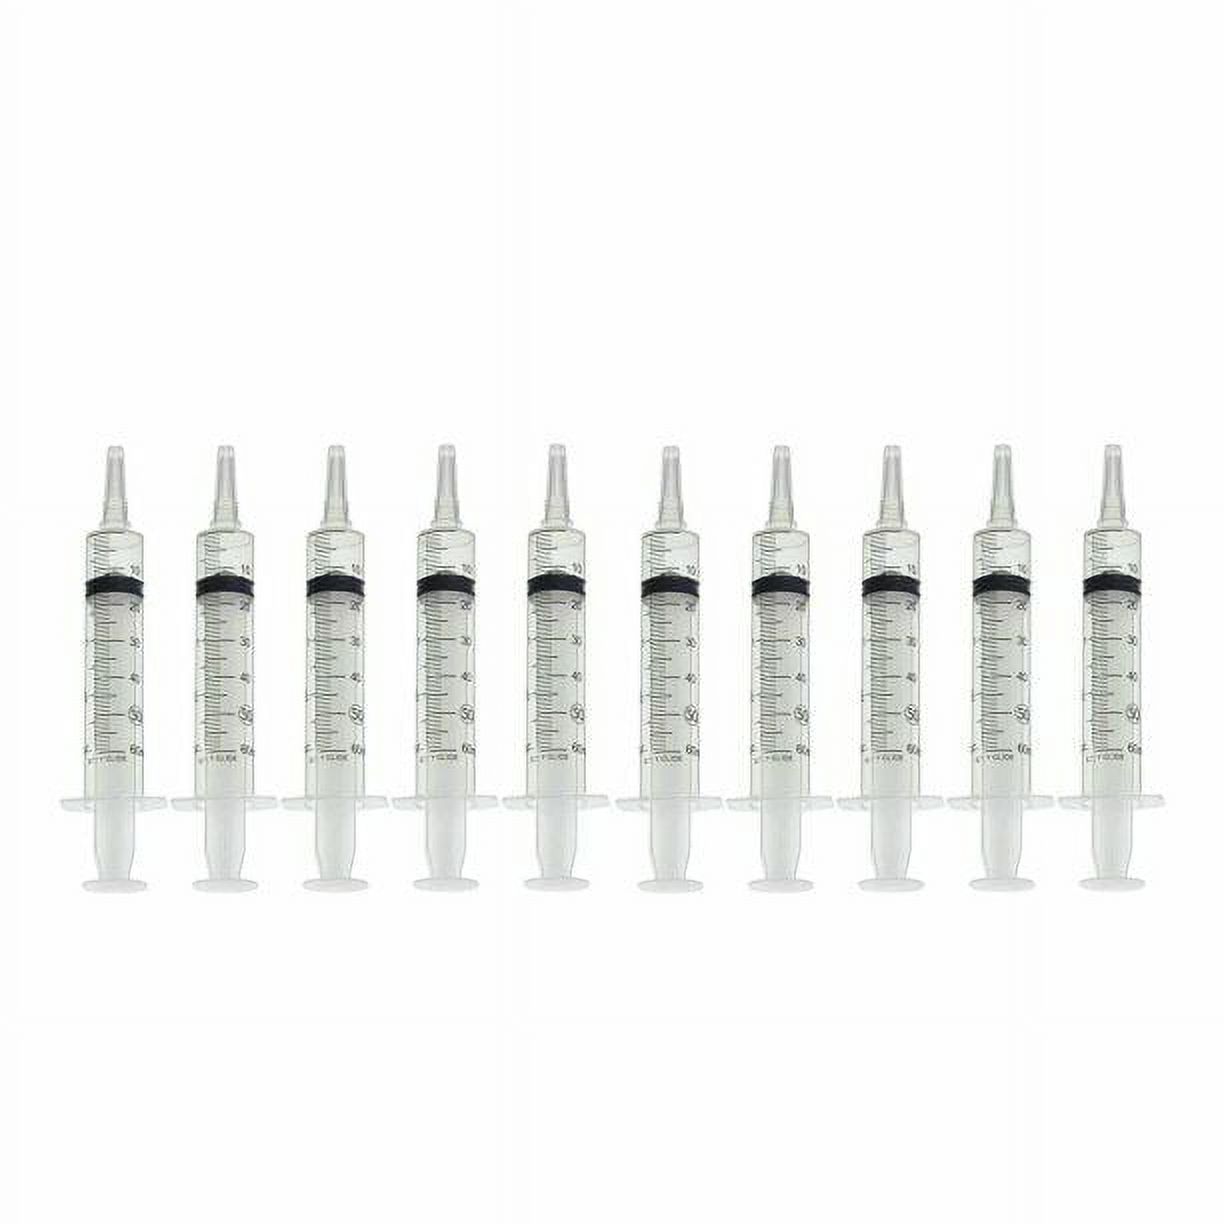 Catheter Tip Syringe 60ML 60CC -Sterile - No Needle - 10 Pack - image 1 of 6